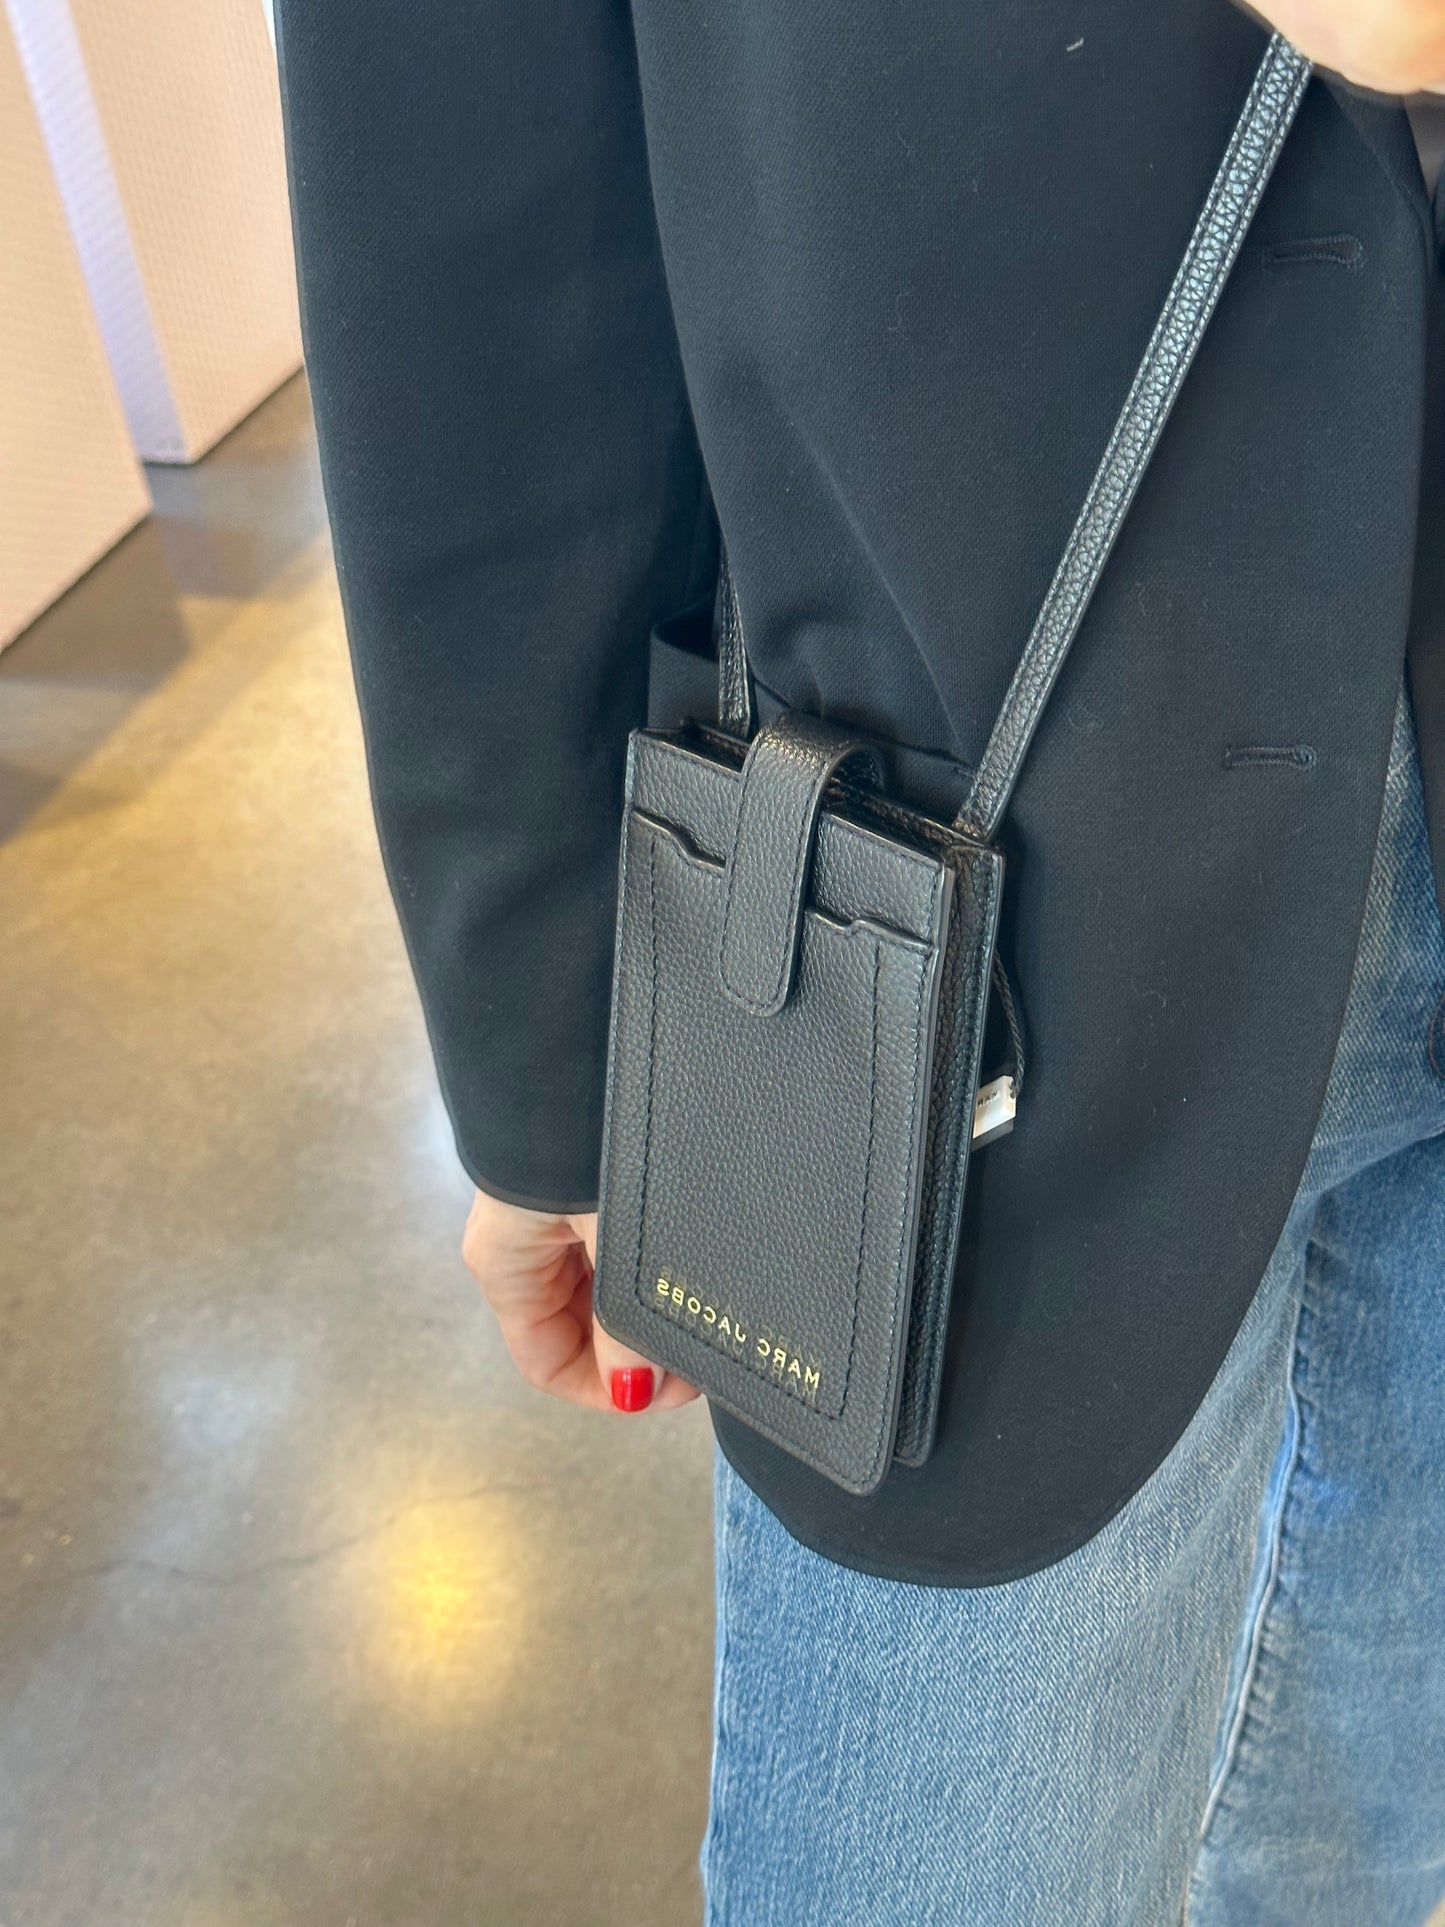 
                  
                    Marc Jacobs Phone Crossbody Bag
                  
                